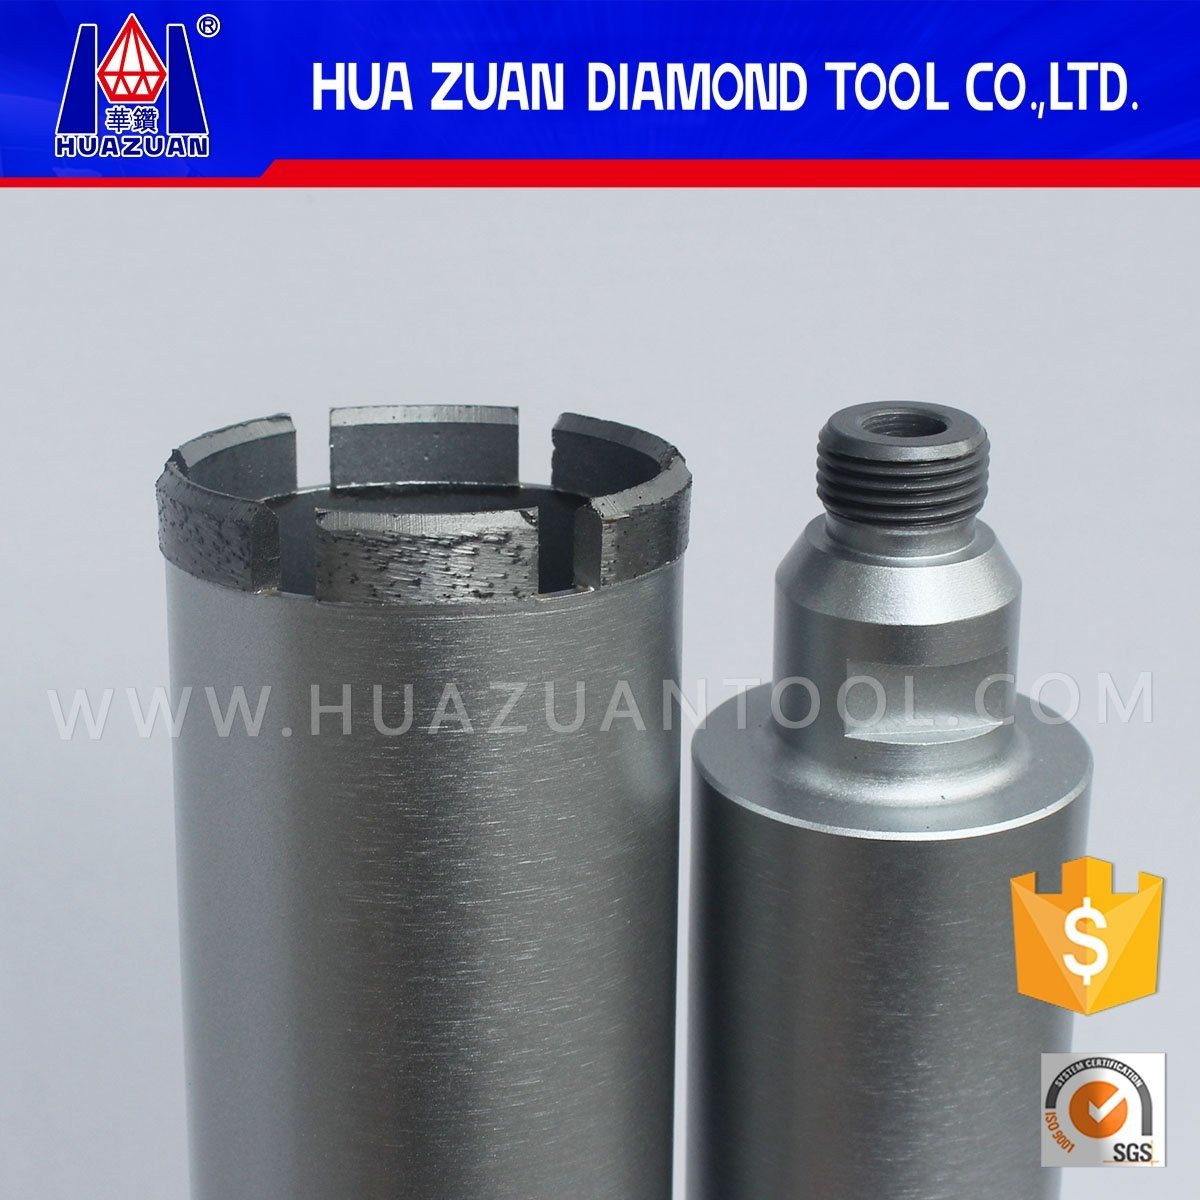 62mm 1-2gas Diamond Core Drill Bit with Roof Segment